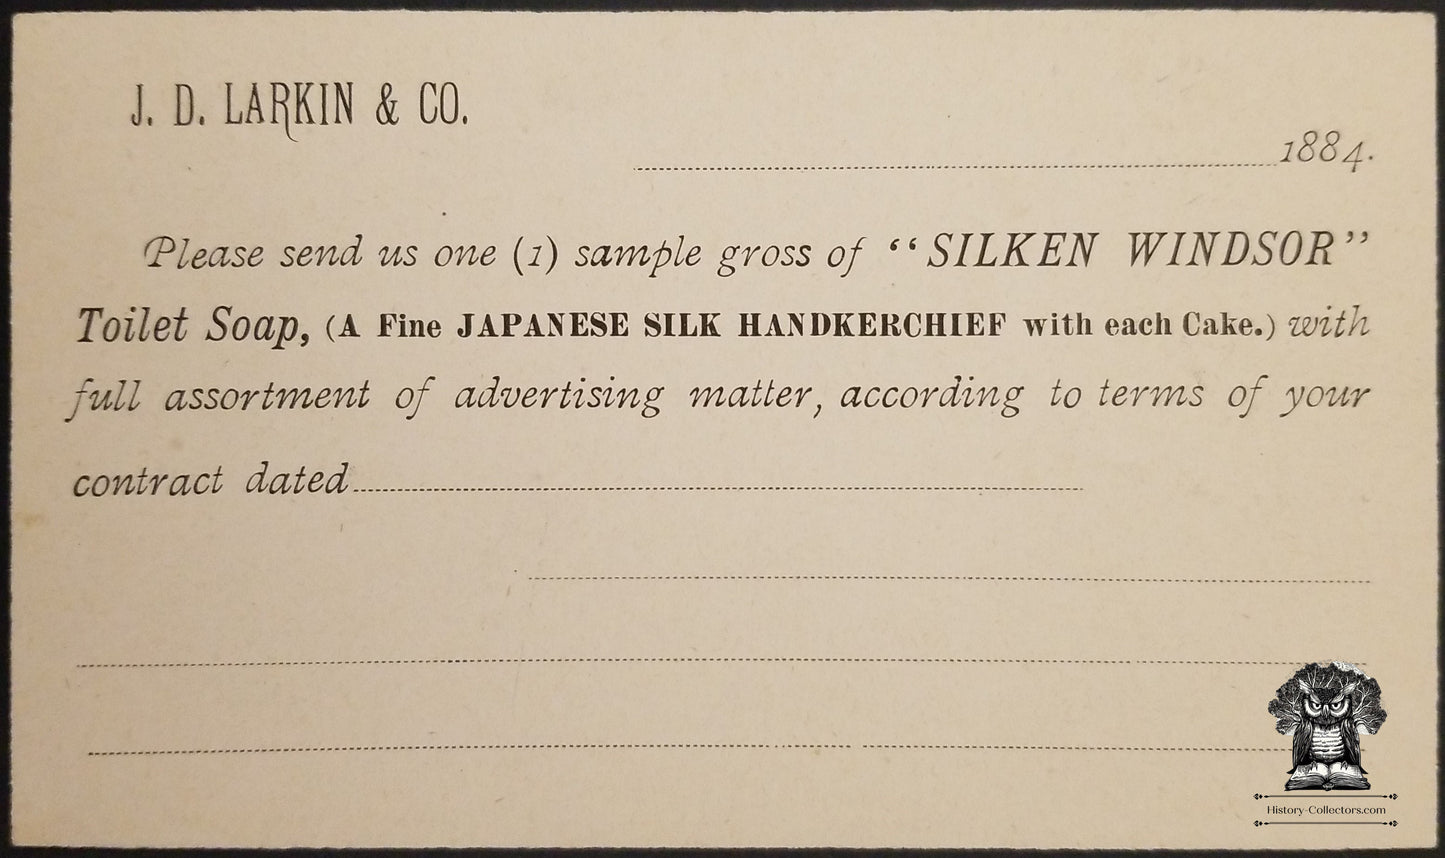 1884 JD Larkin Silken Windsor Toilet Soap Sample Request Advertising Postcard - Buffalo NY - One Cent Liberty Postal Card - Scott UX7